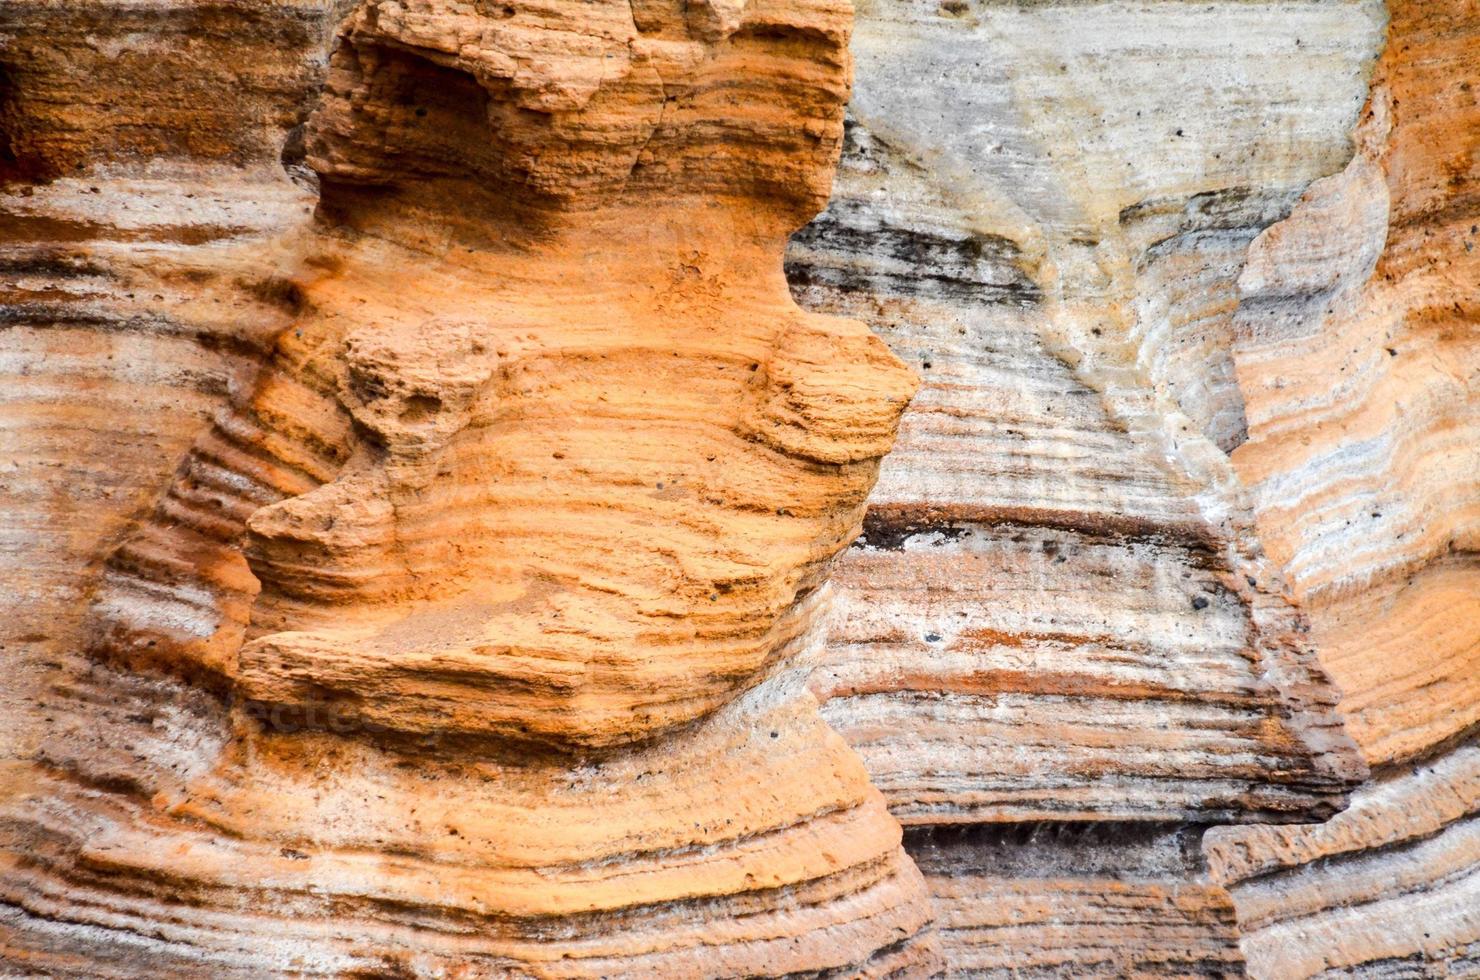 Rocks close-up texture photo